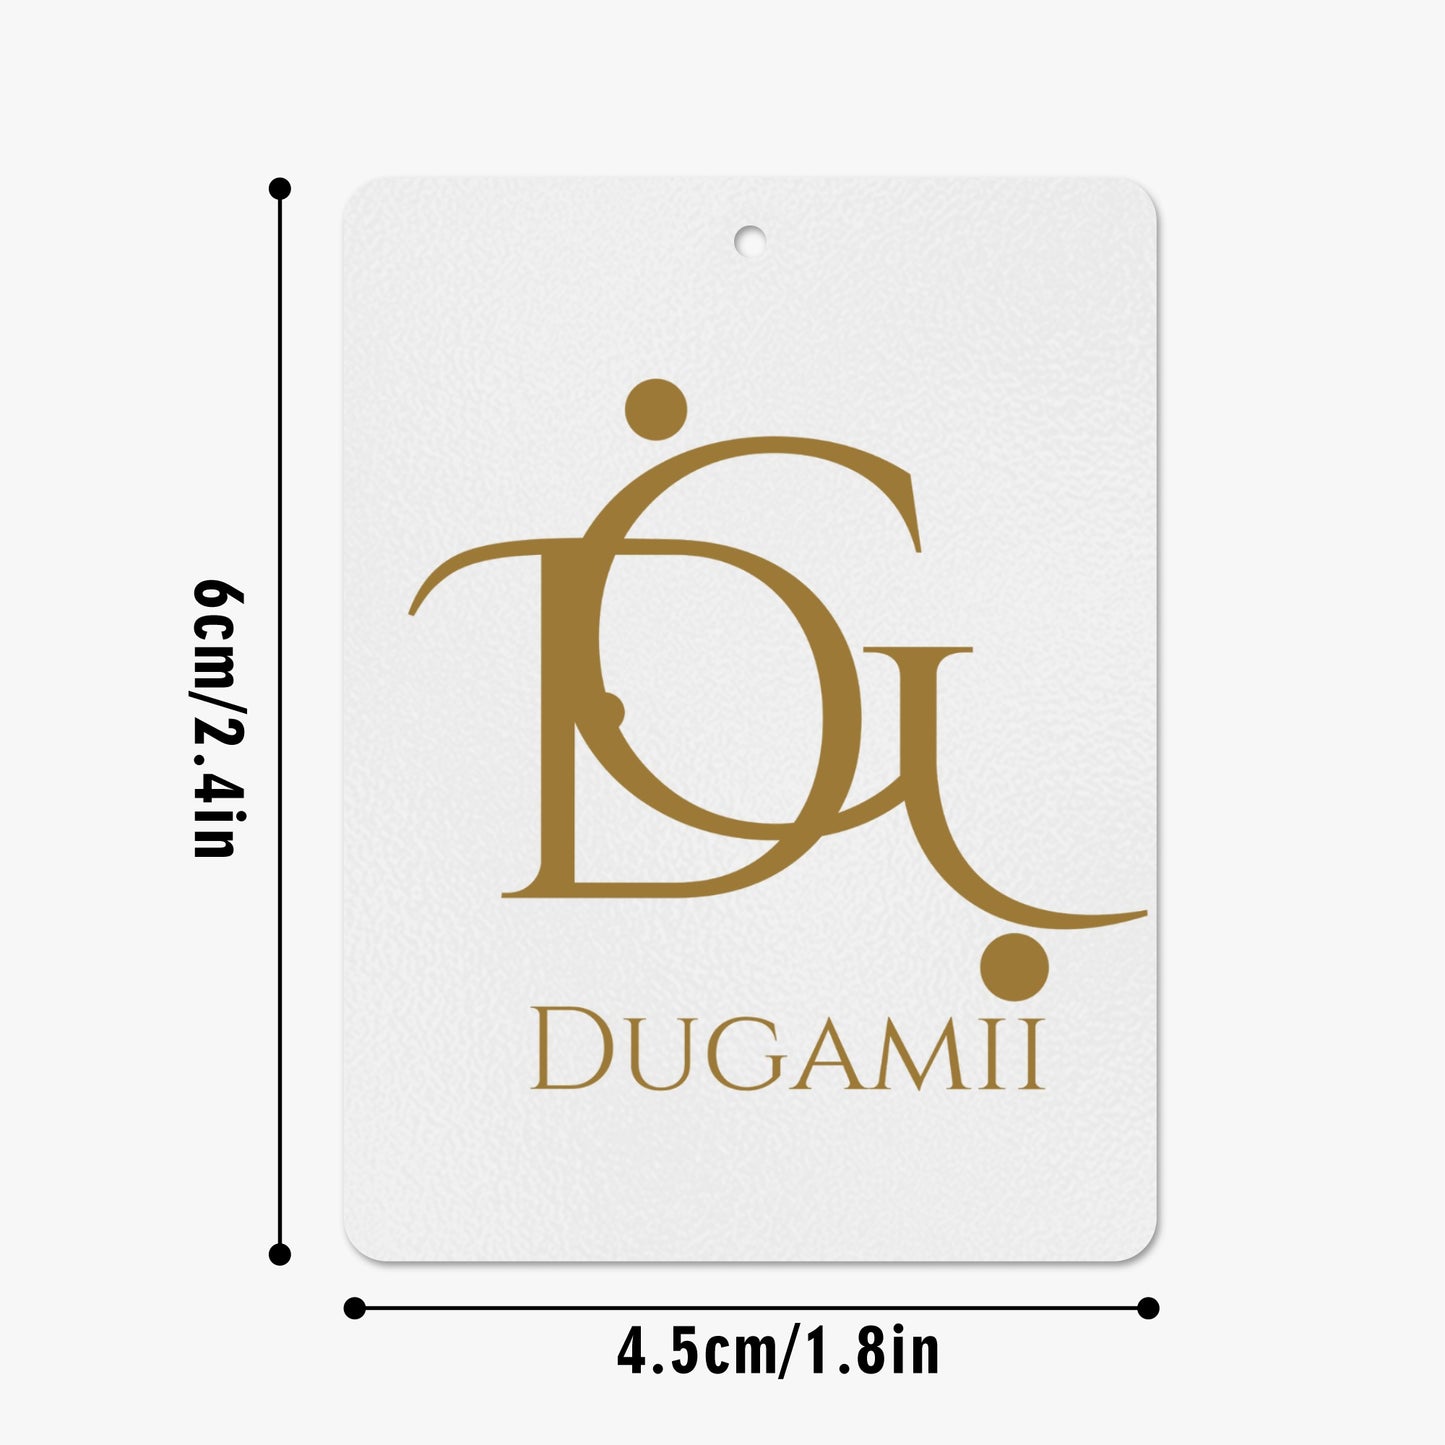 DuGamii Lightweight Warm Plush Black and Gold Slippers